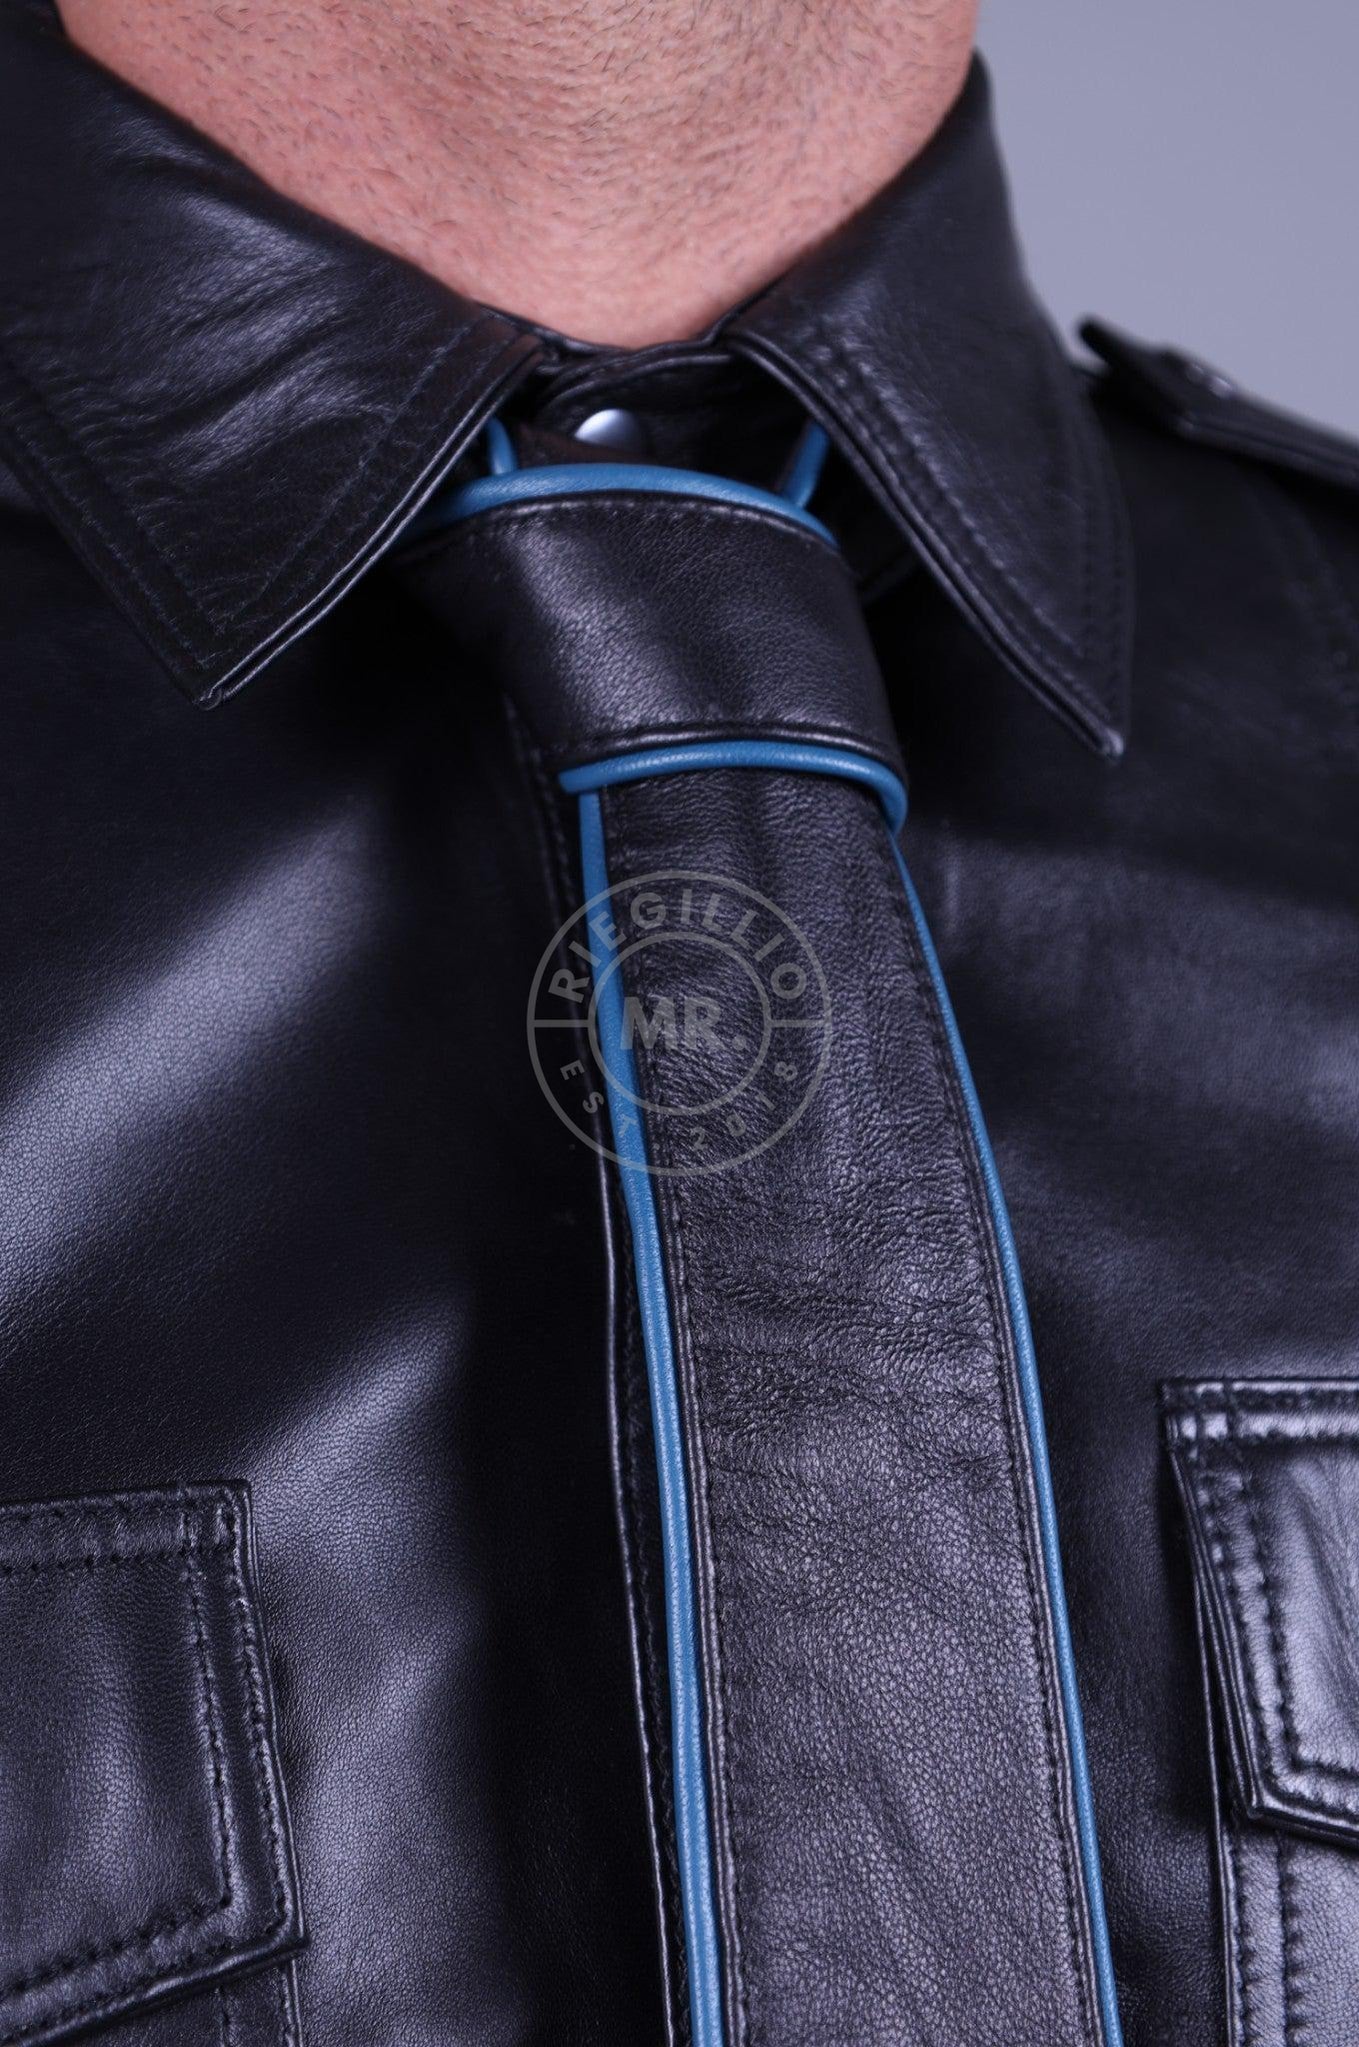 Black Leather Tie - JEANS BLUE Piping-at MR. Riegillio